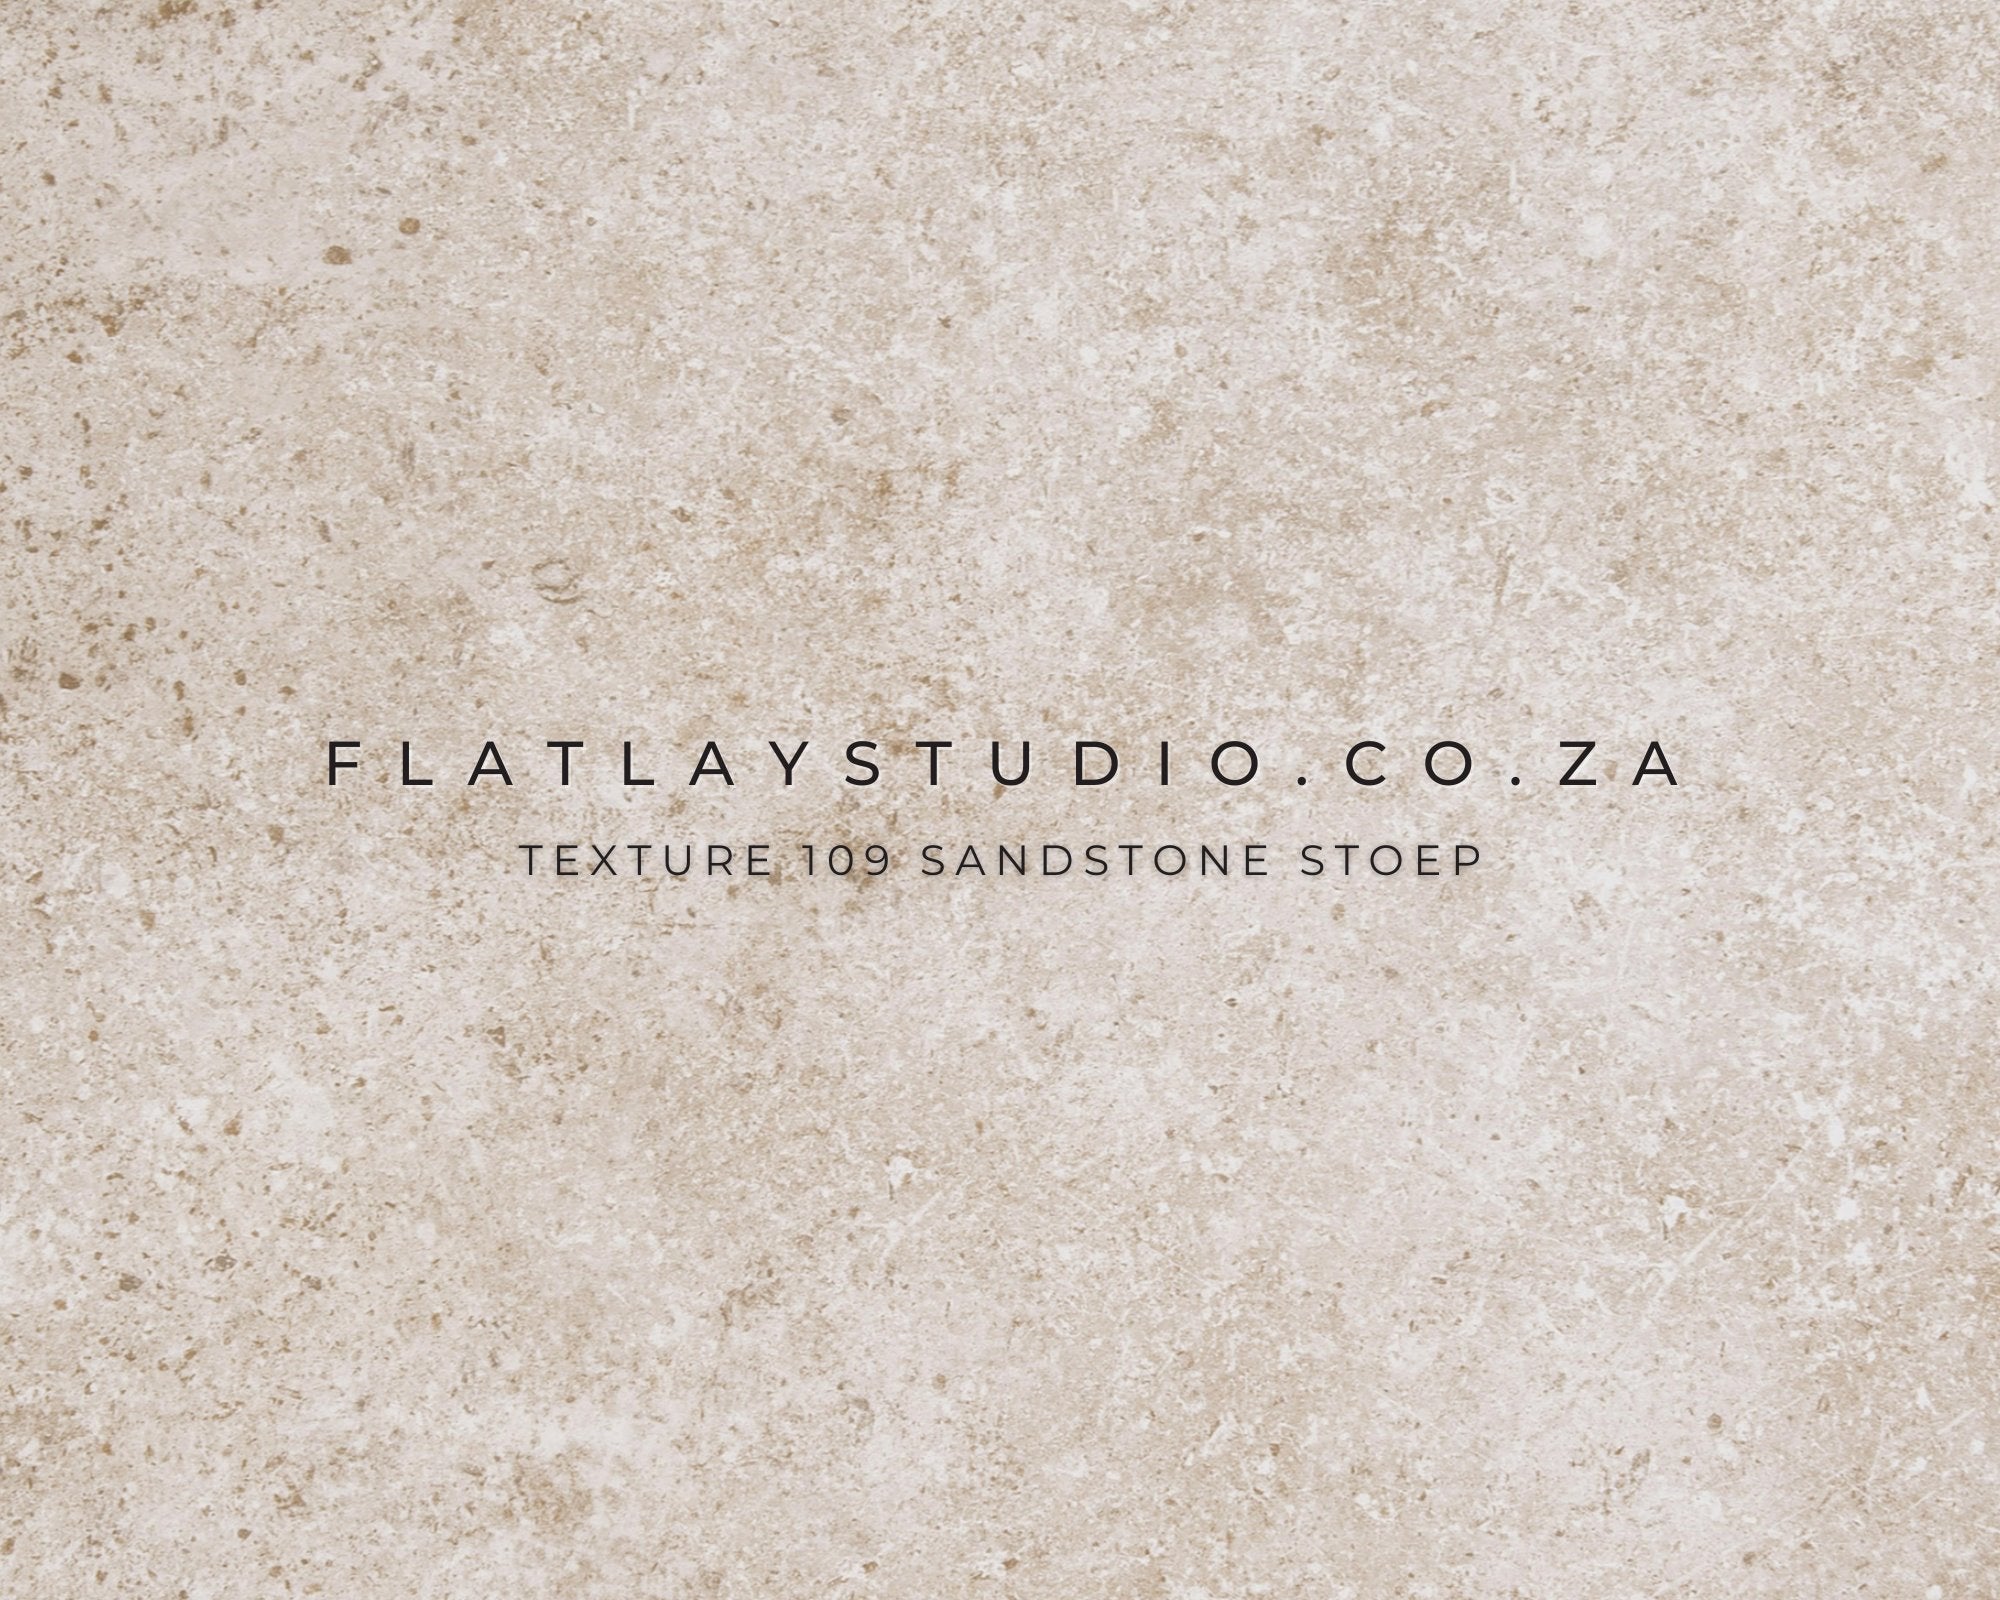 Texture 109 Sandstone Stoep Flatlay Styling Board Flatlay Studio 